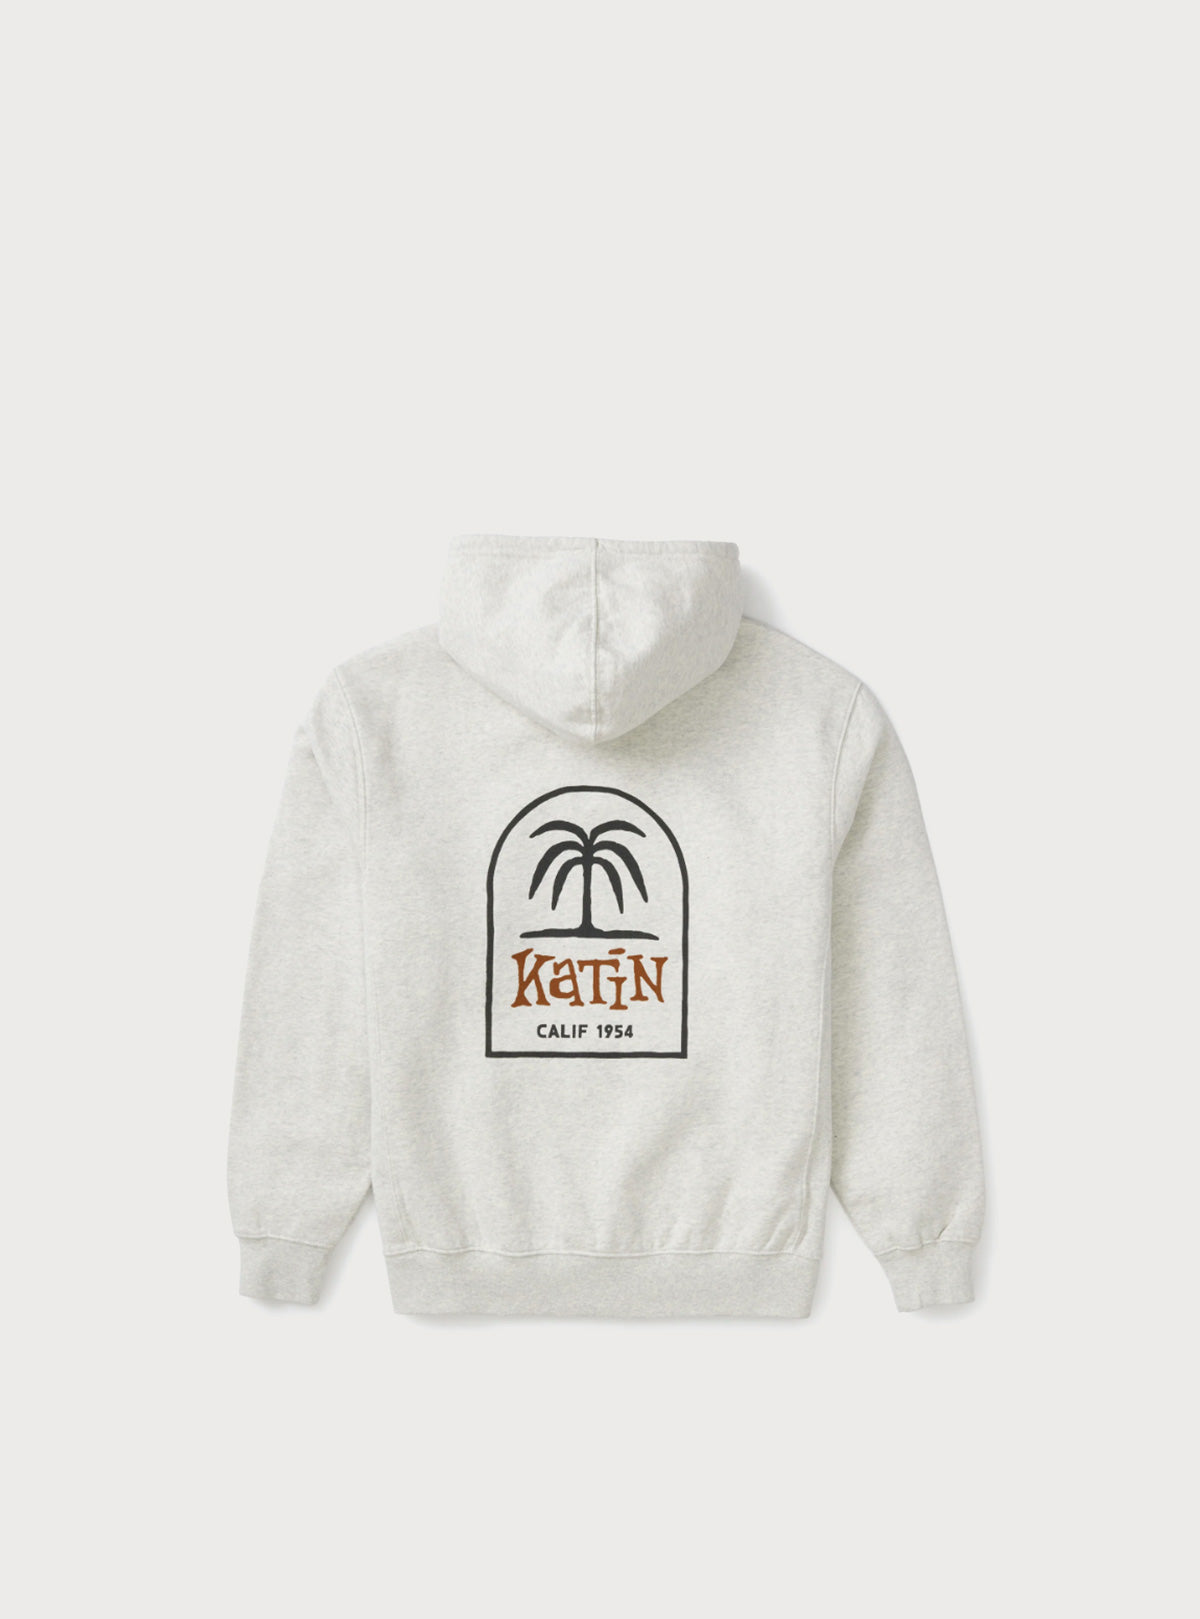 Katin - K-Palm Hood - Grey